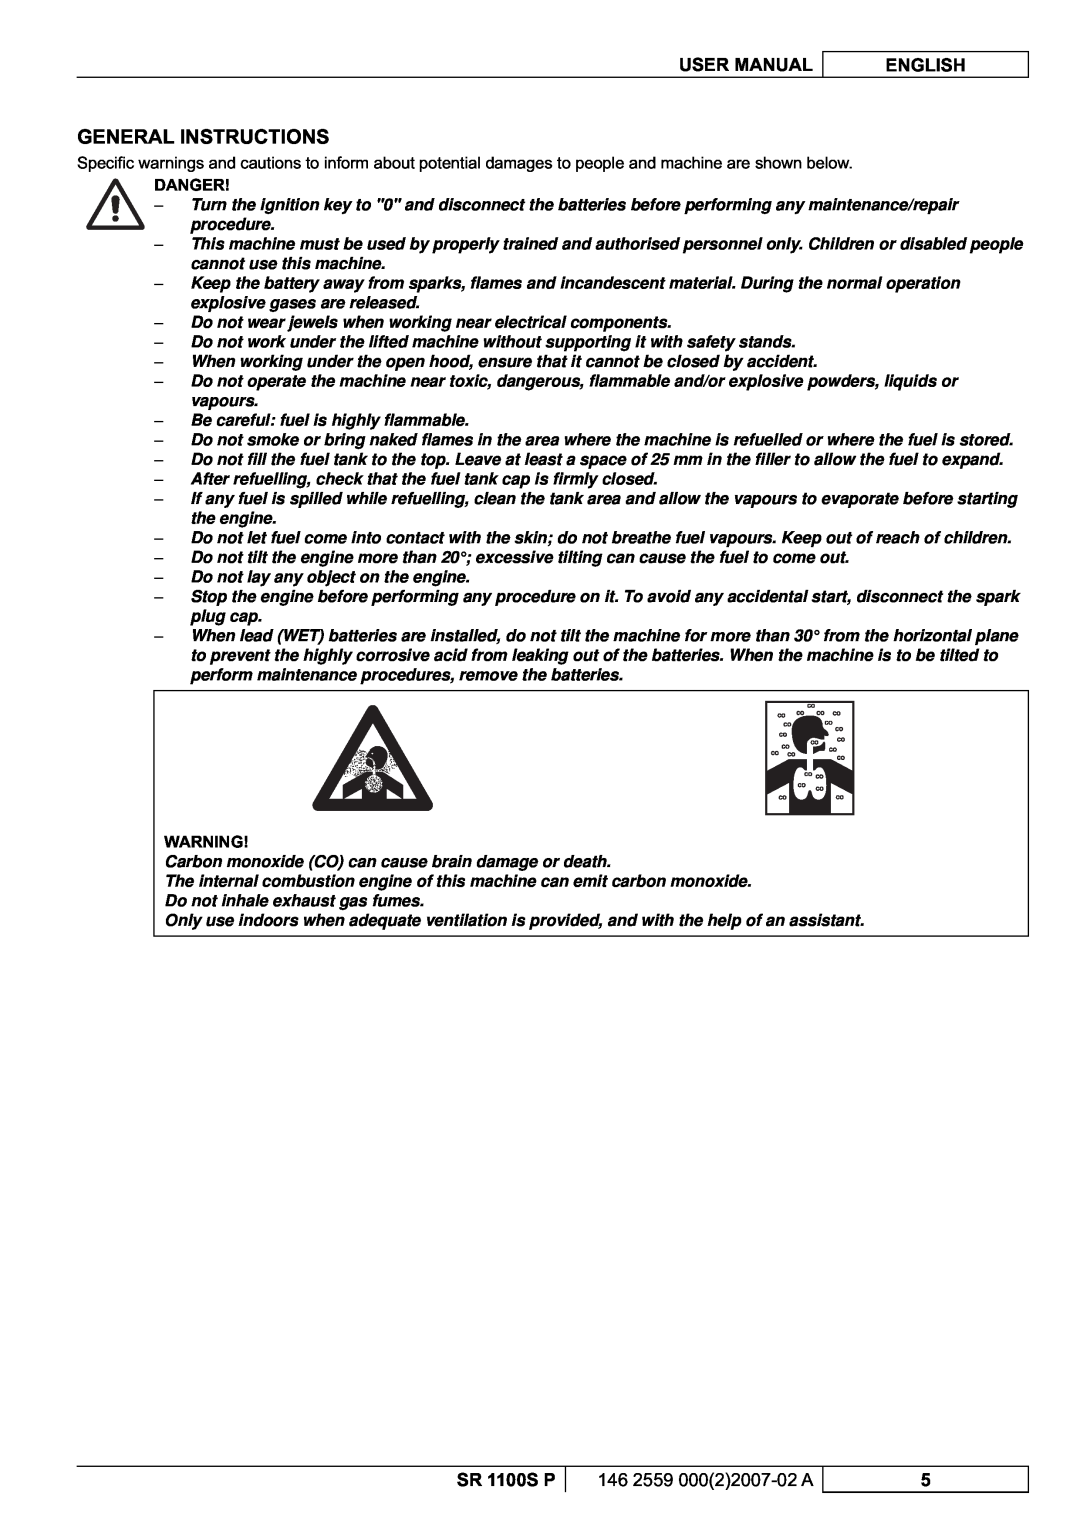 Nilfisk-Advance America General Instructions, User Manual, English, SR 1100S P, 146 2559 00022007-02A, Danger 